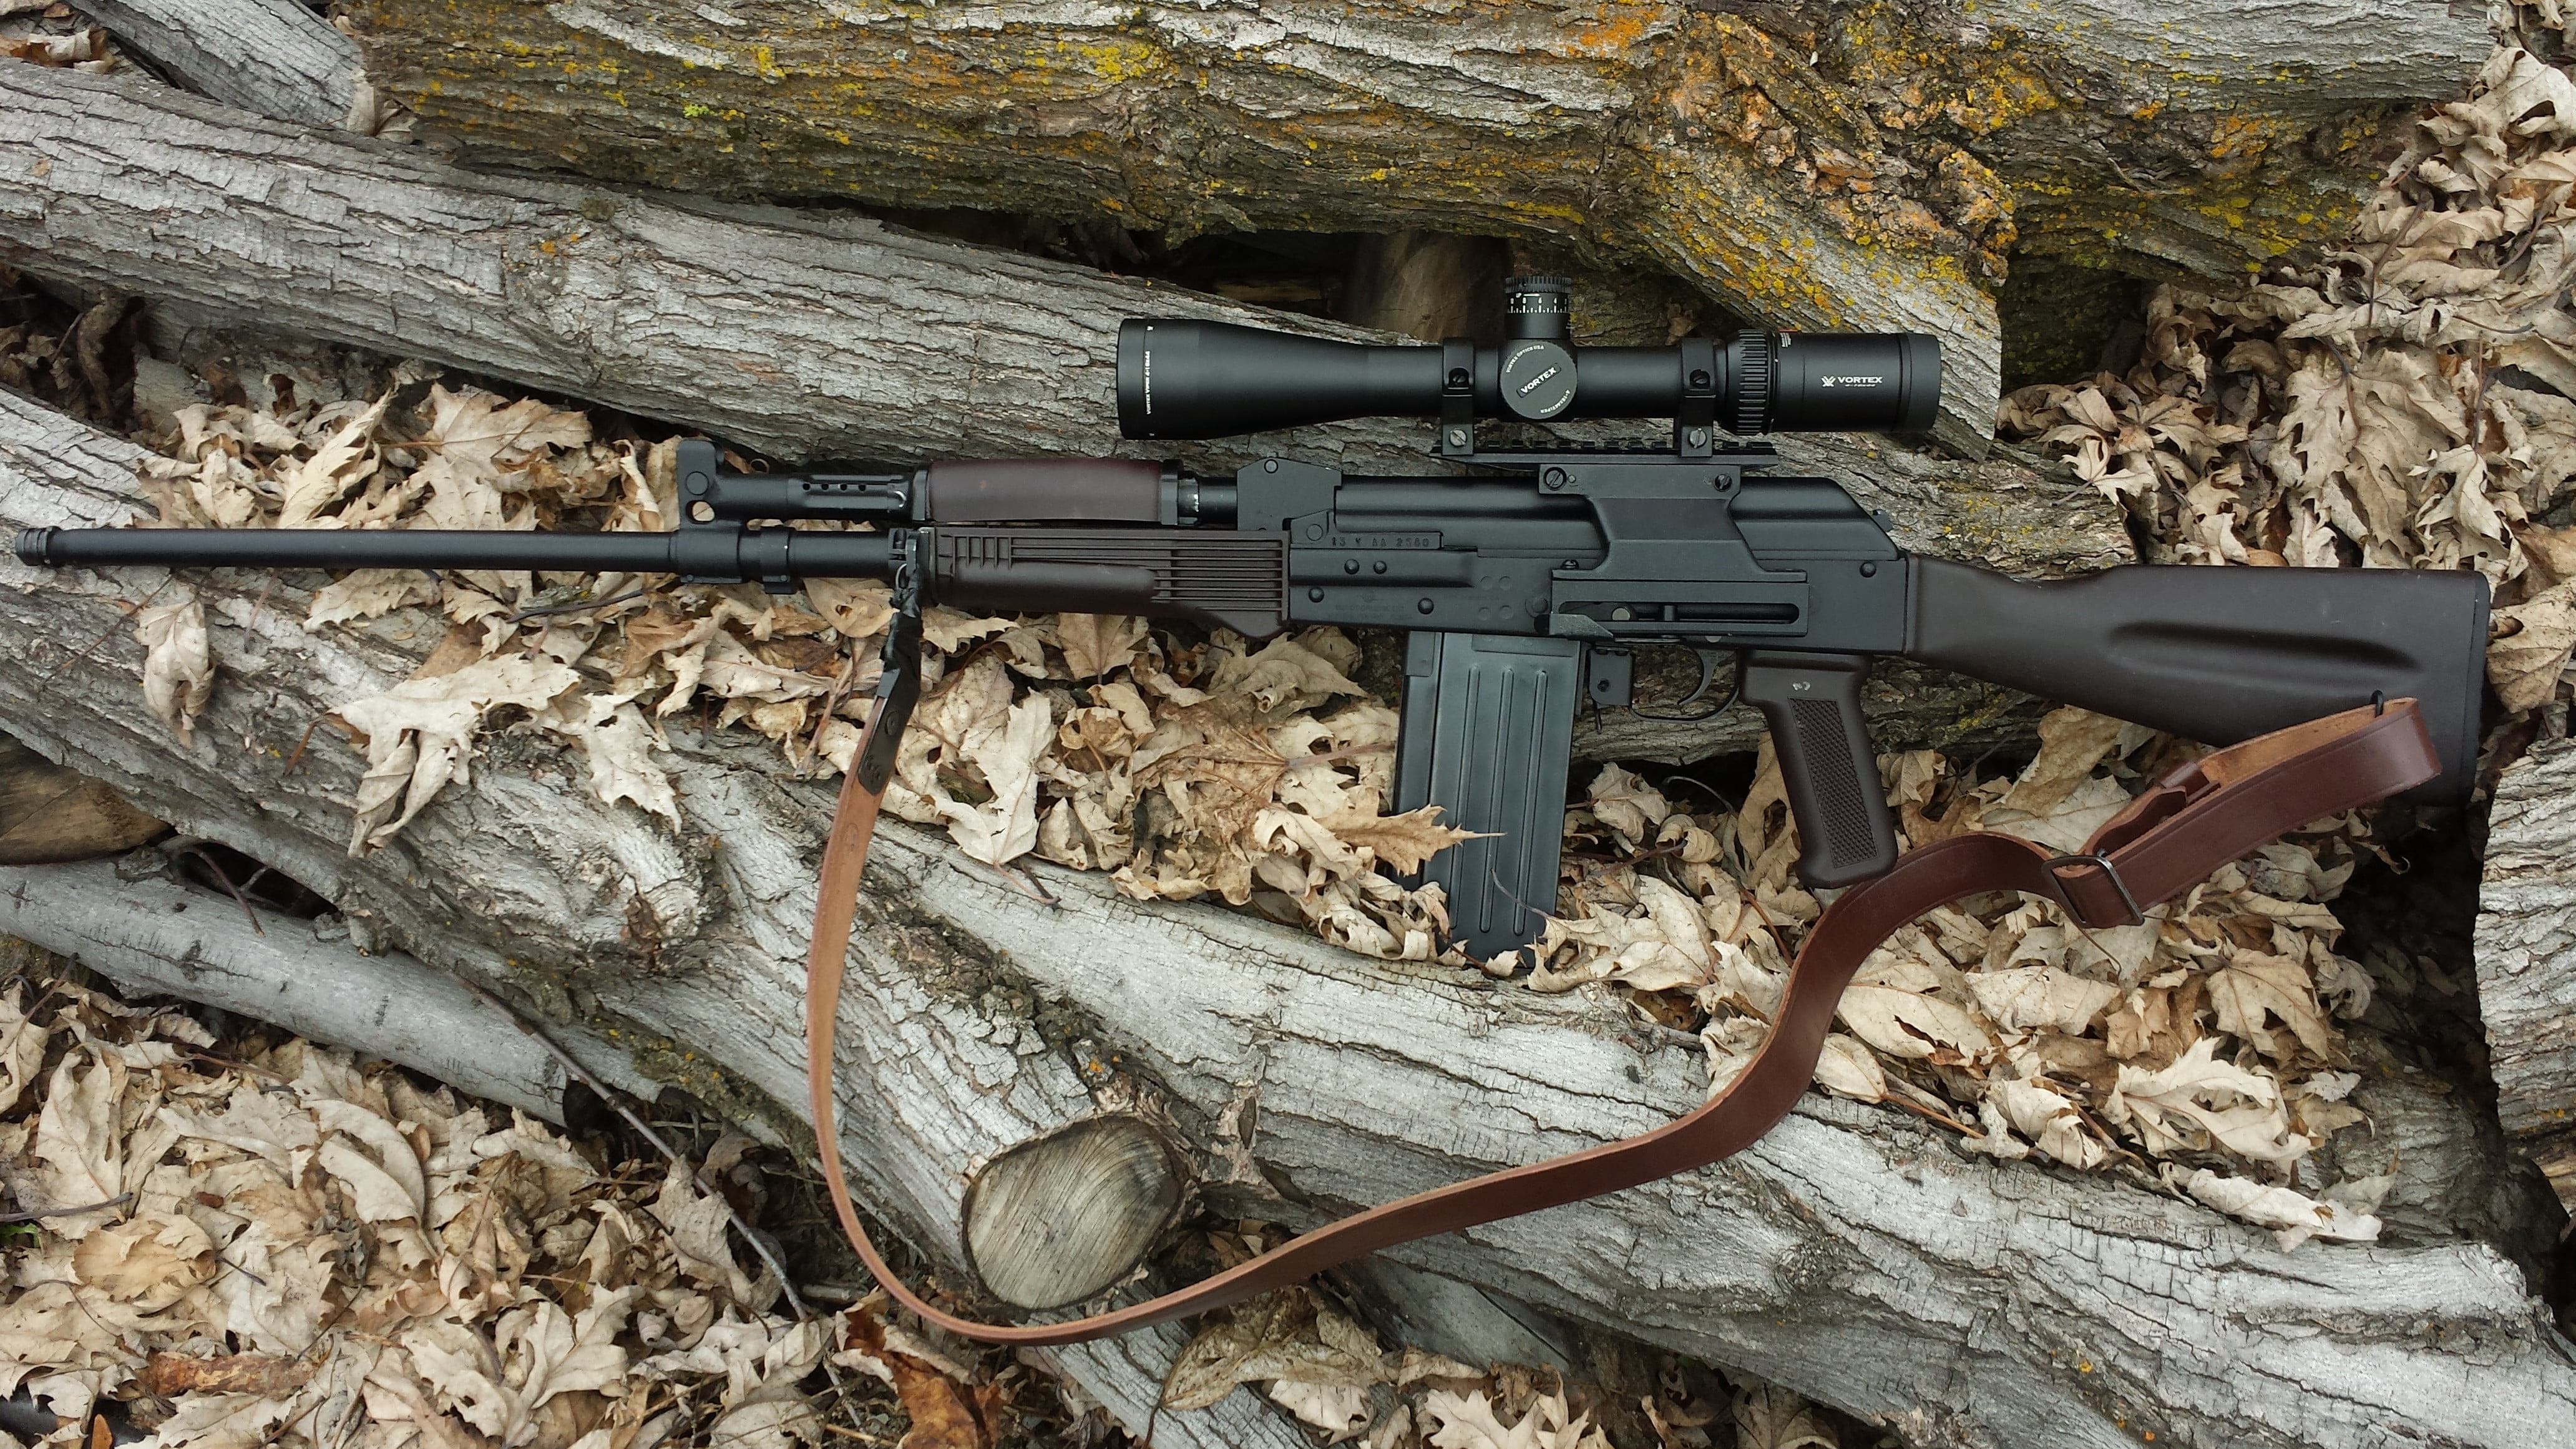 black sniper rifle, weapons, optics, carabiner, self-loading